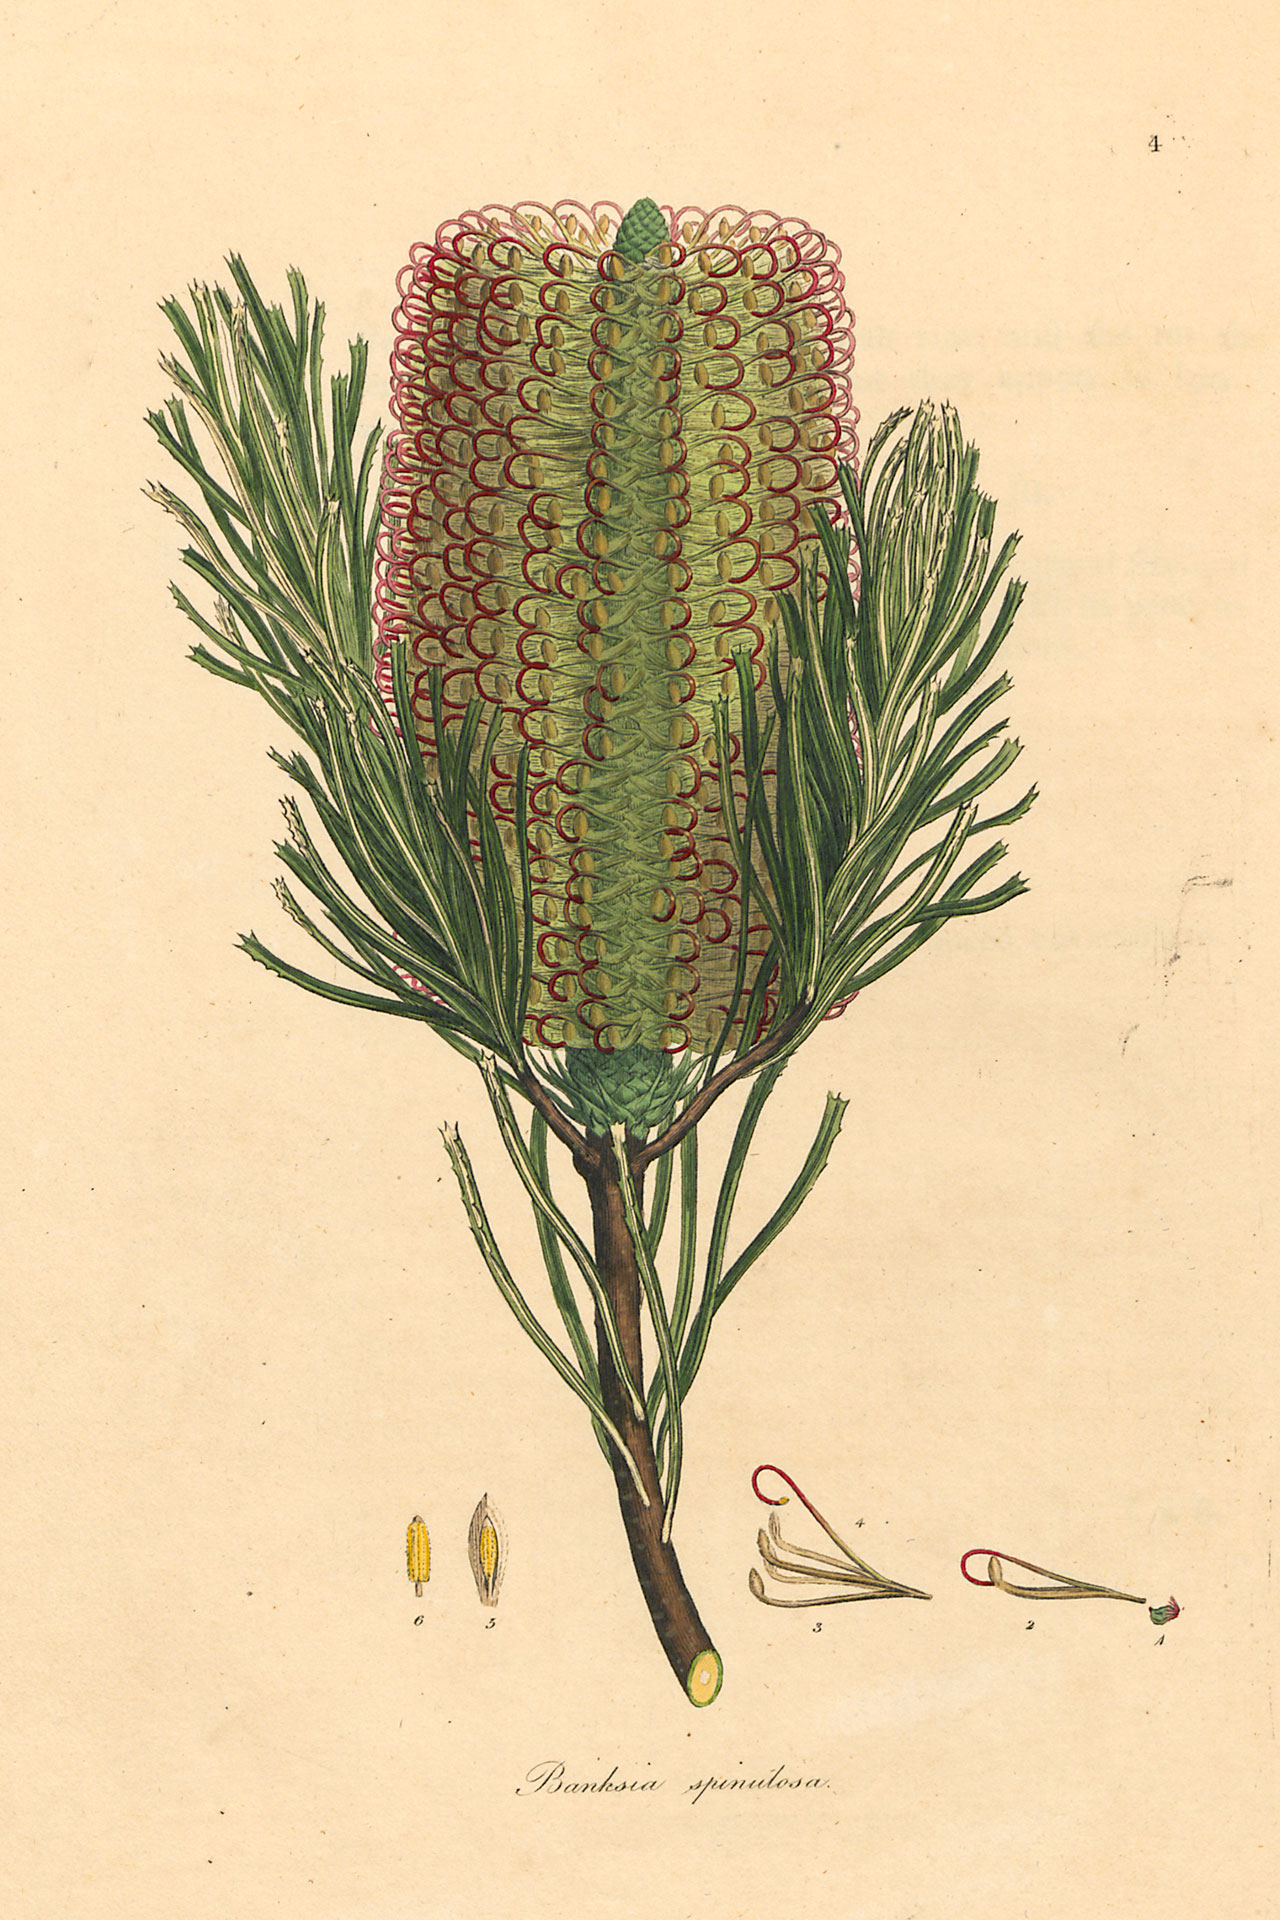 Banksia spinulosa.